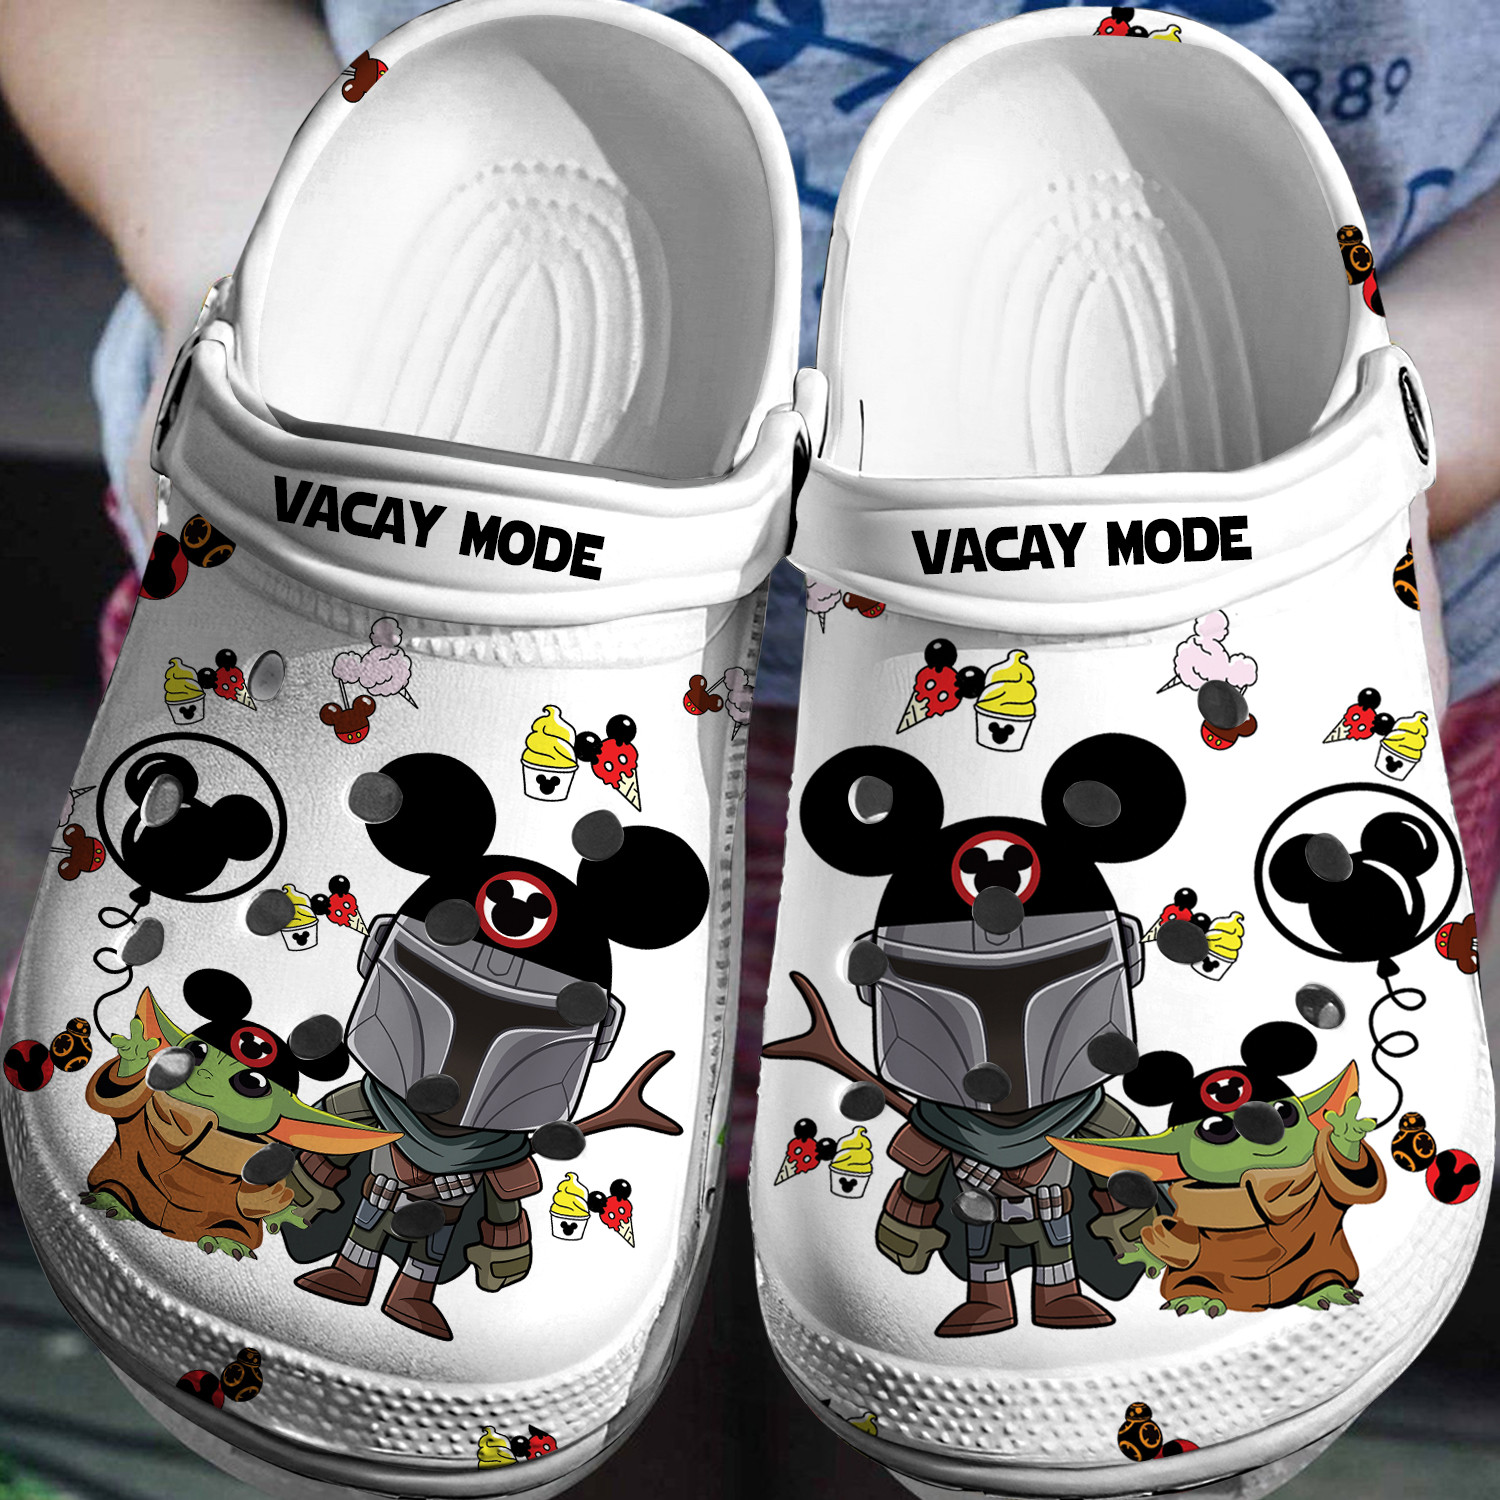 Vacay Mode Baby Yoda The Mandalorian Crocs 3D Clog Shoes